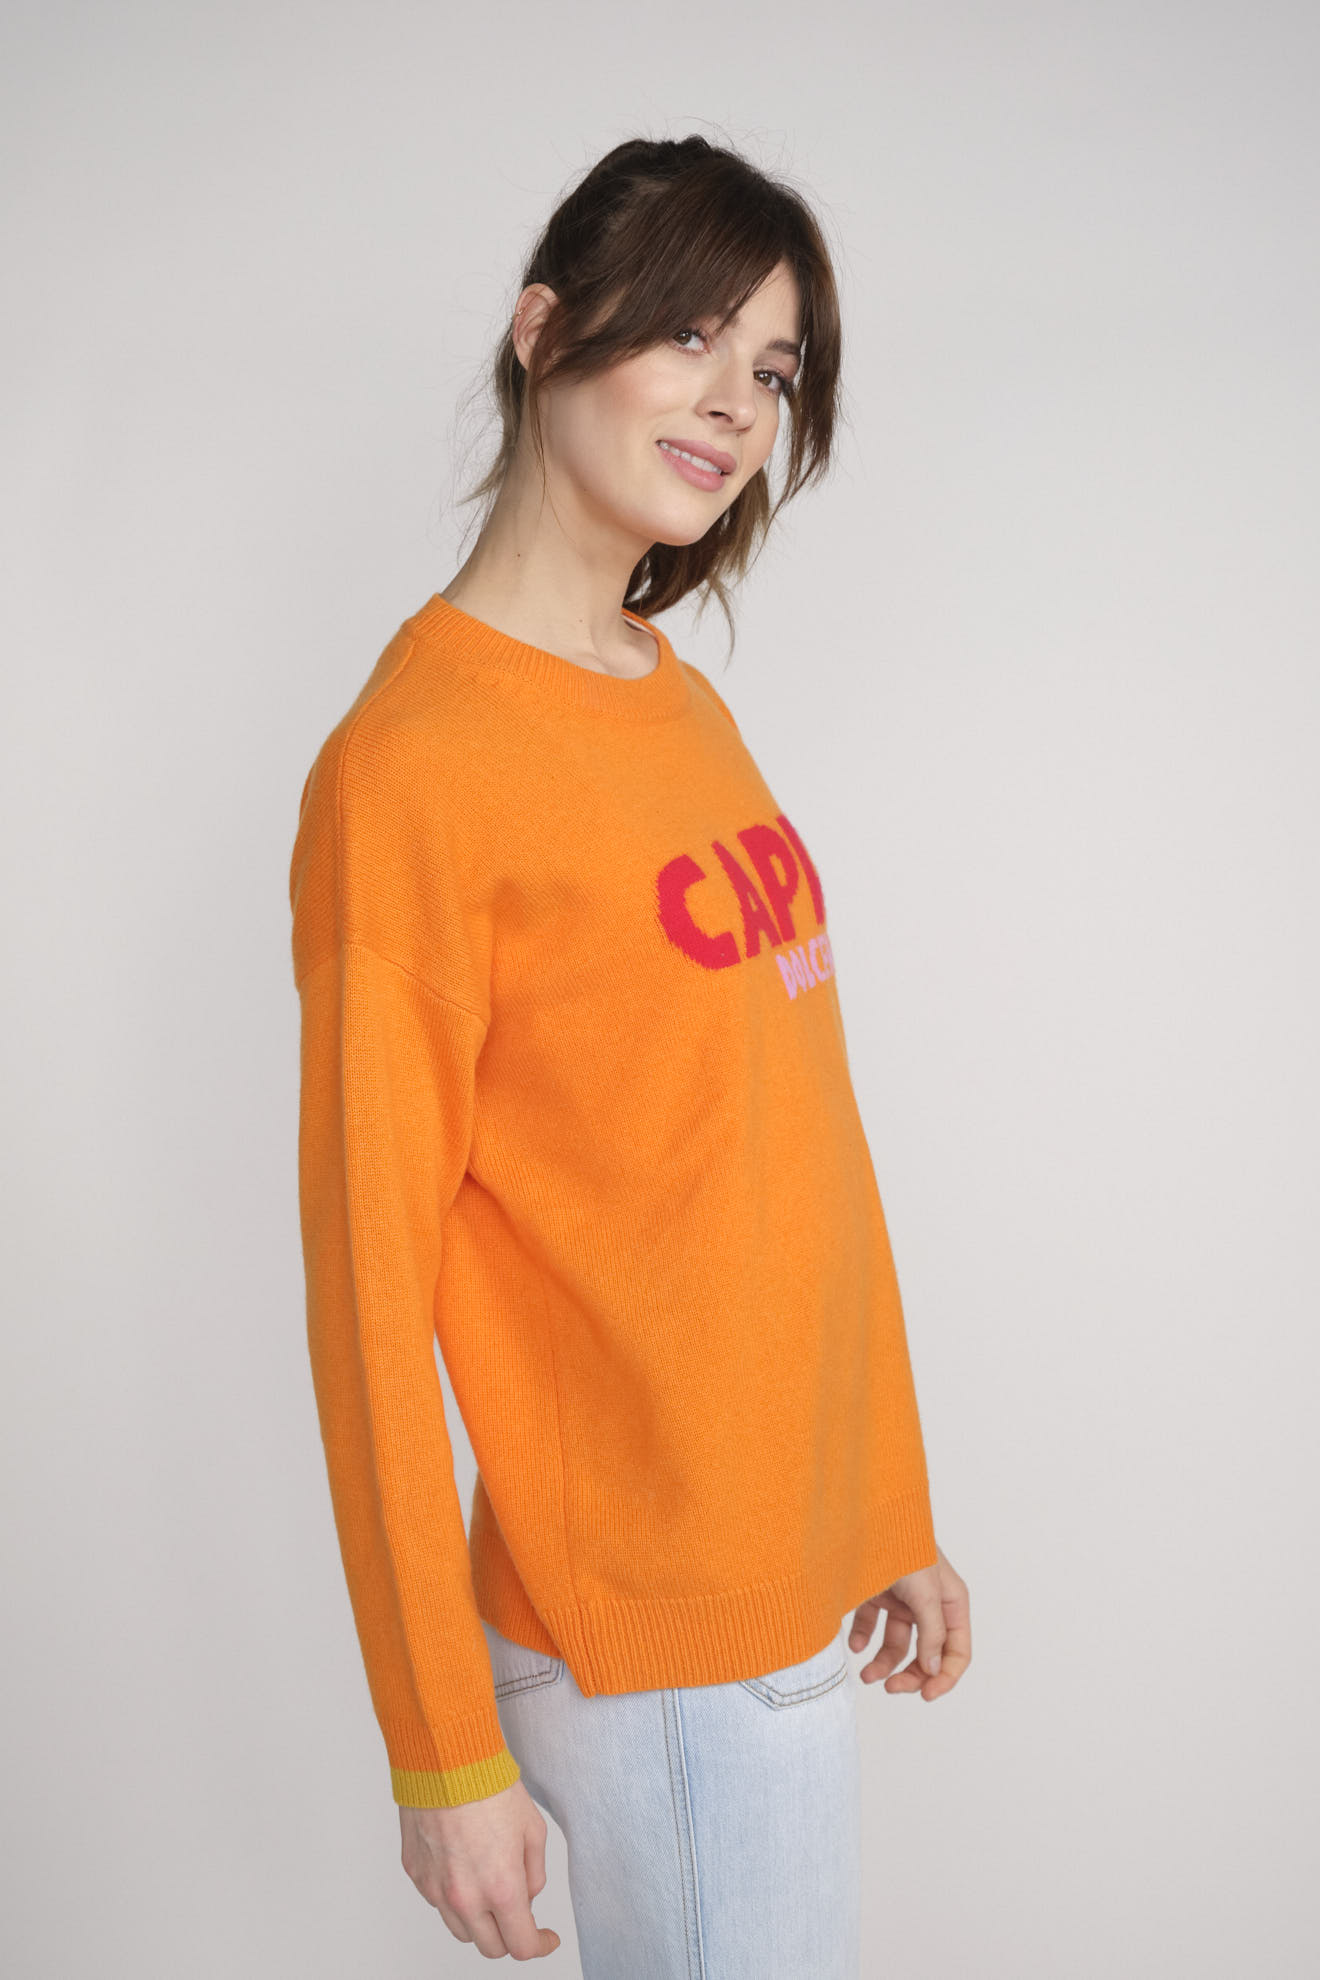 Catrin Schanz Capri - Maglia a maniche lunghe in cashmere con stampa arancione M